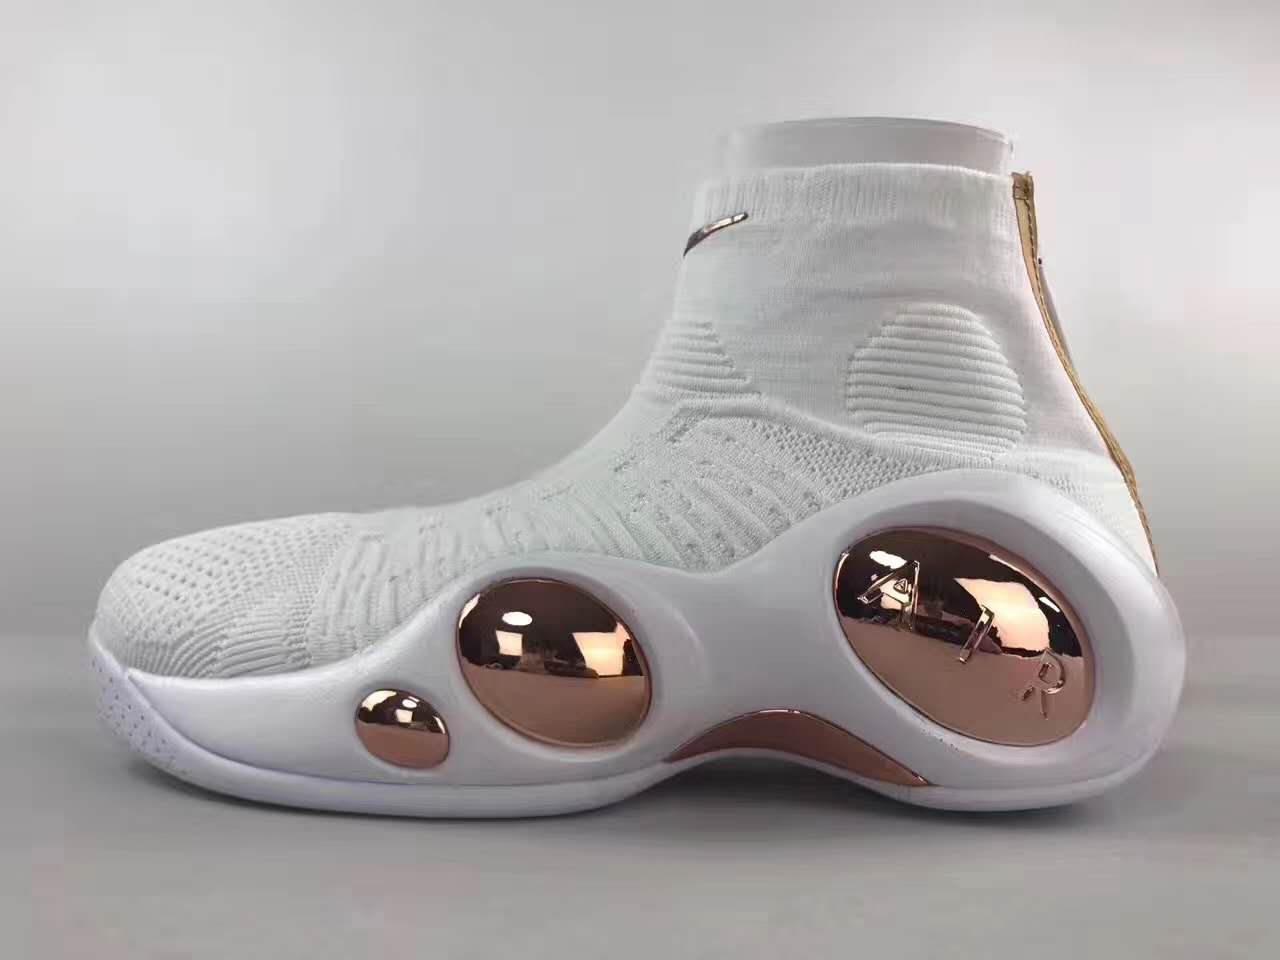 Nike Flight Bonafide White Gold Shoes 